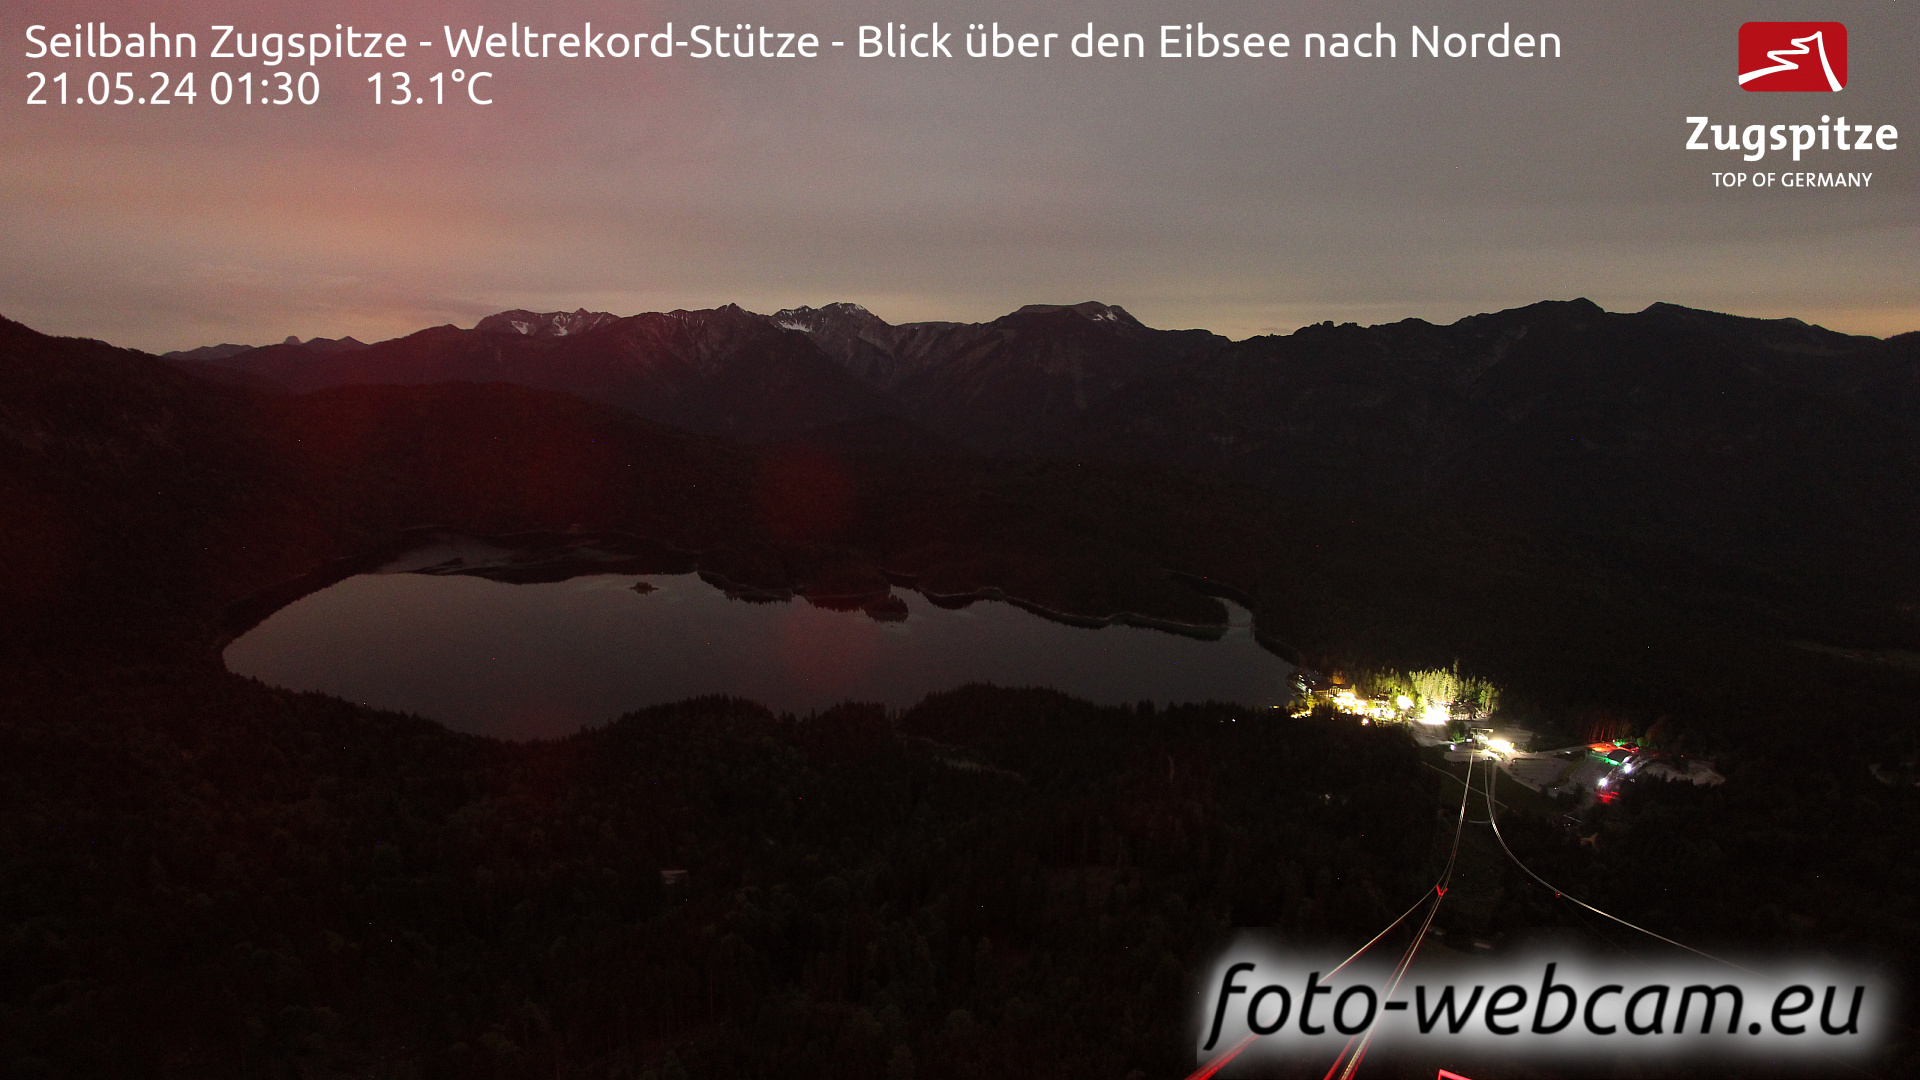 Zugspitze Ons. 01:49